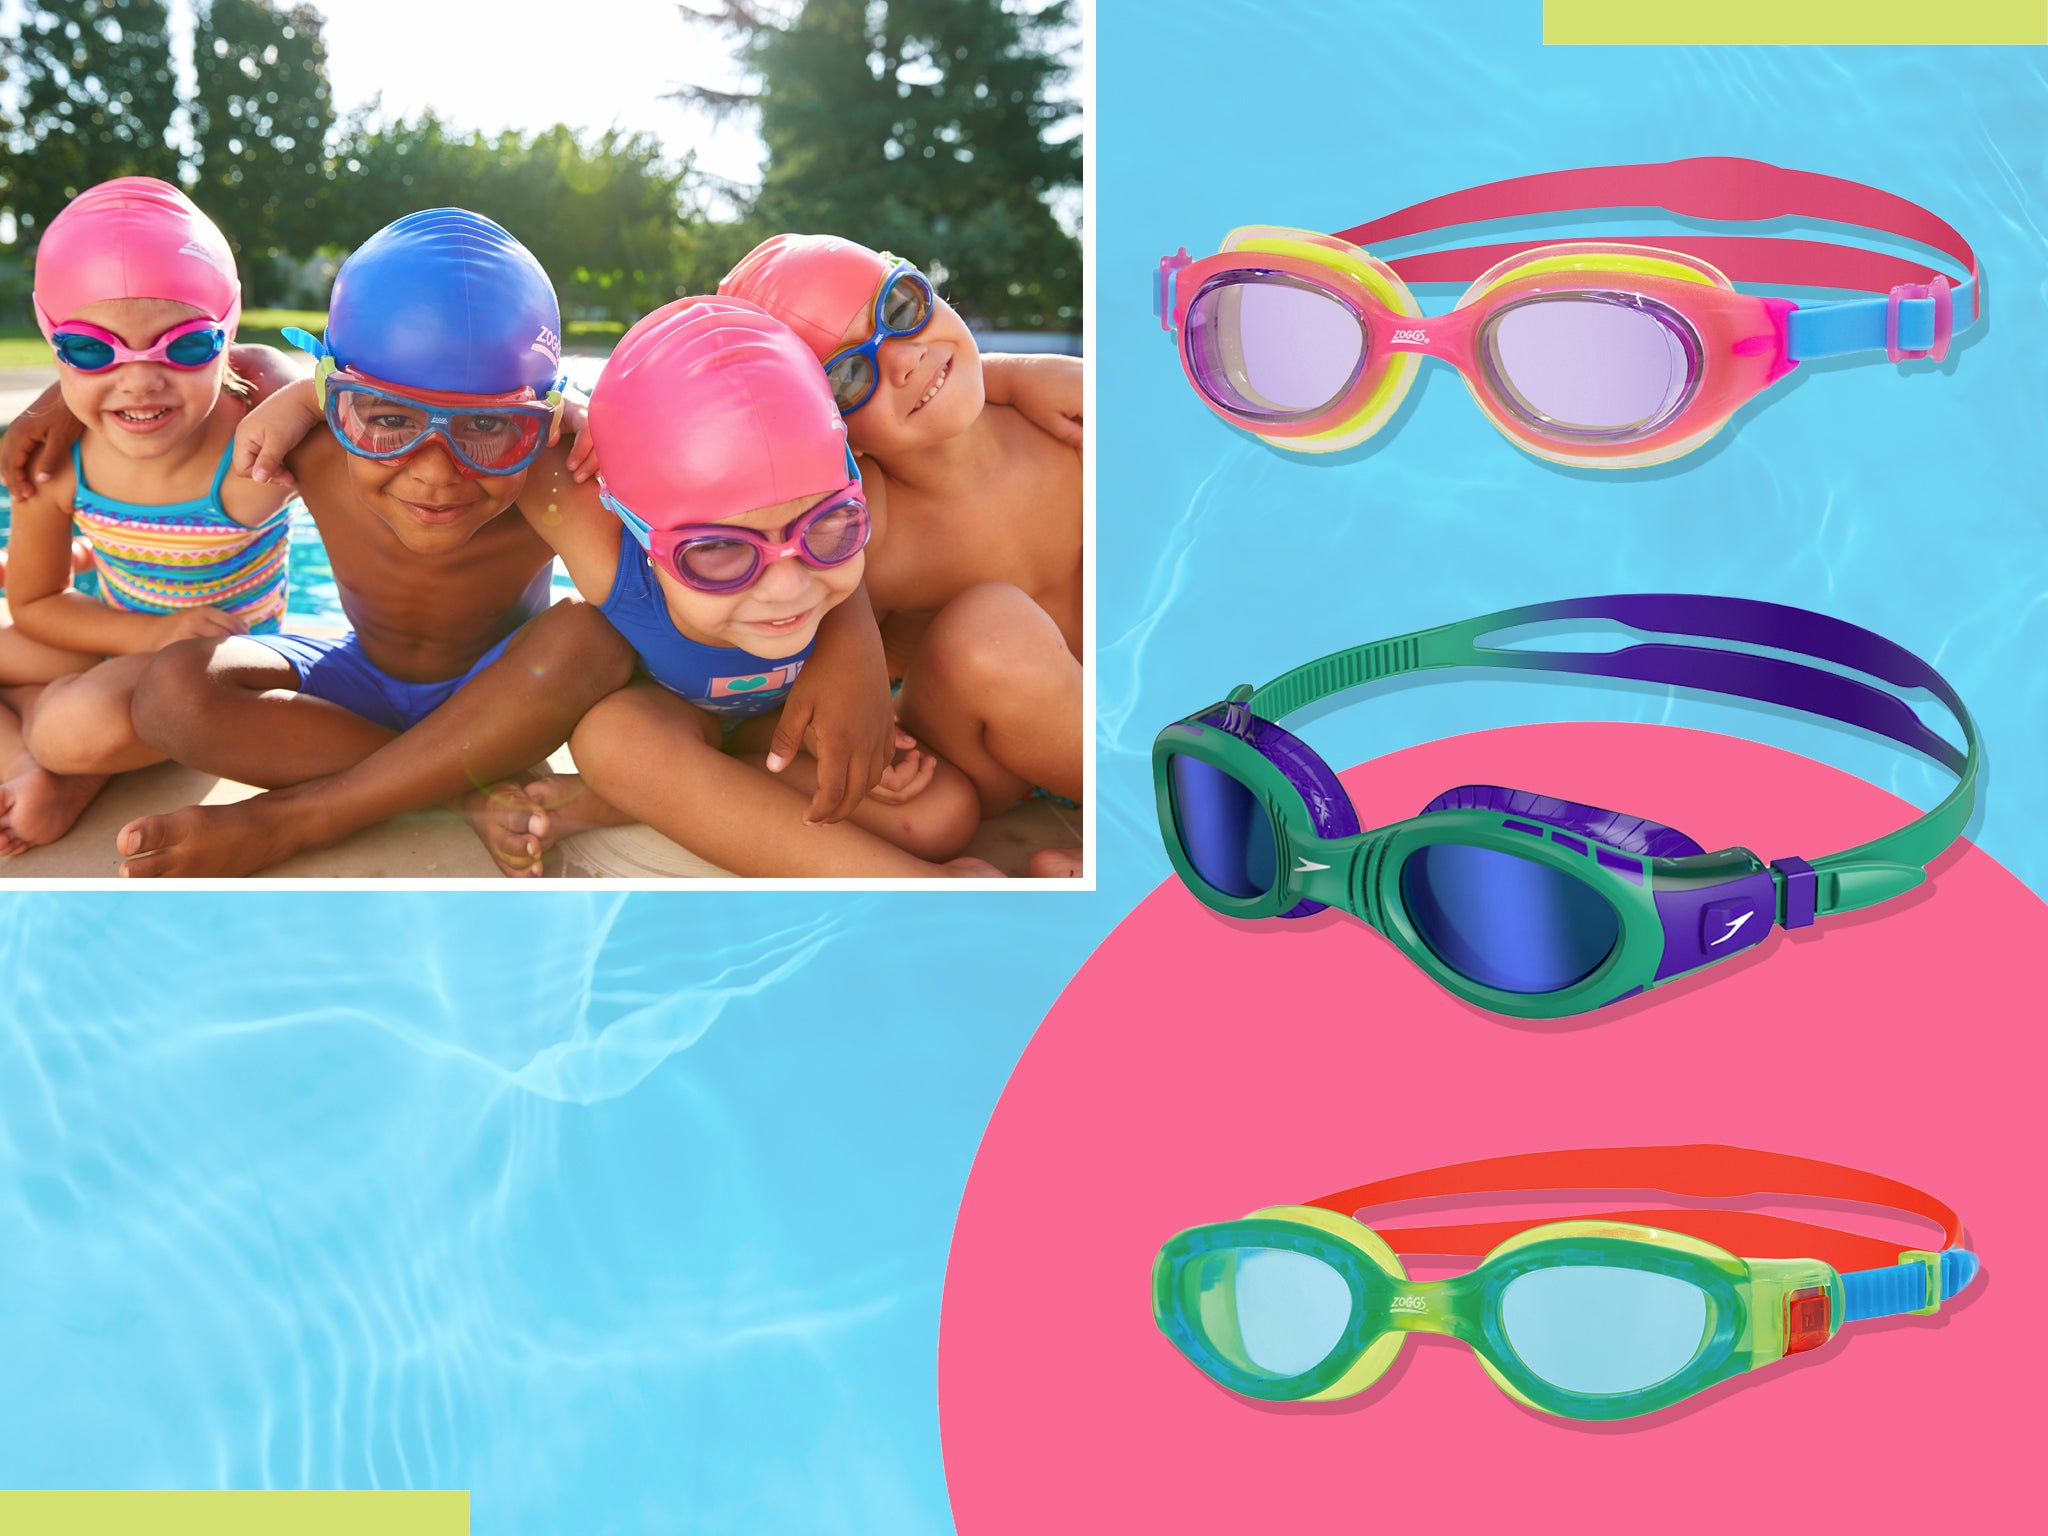 Waterproof Kids Swim Goggles Anti-Fog Fish Decoration Children Swimming Glasses Beach Pool Accessories Eyewear Pink LIOOBO Kids Swimming Goggles